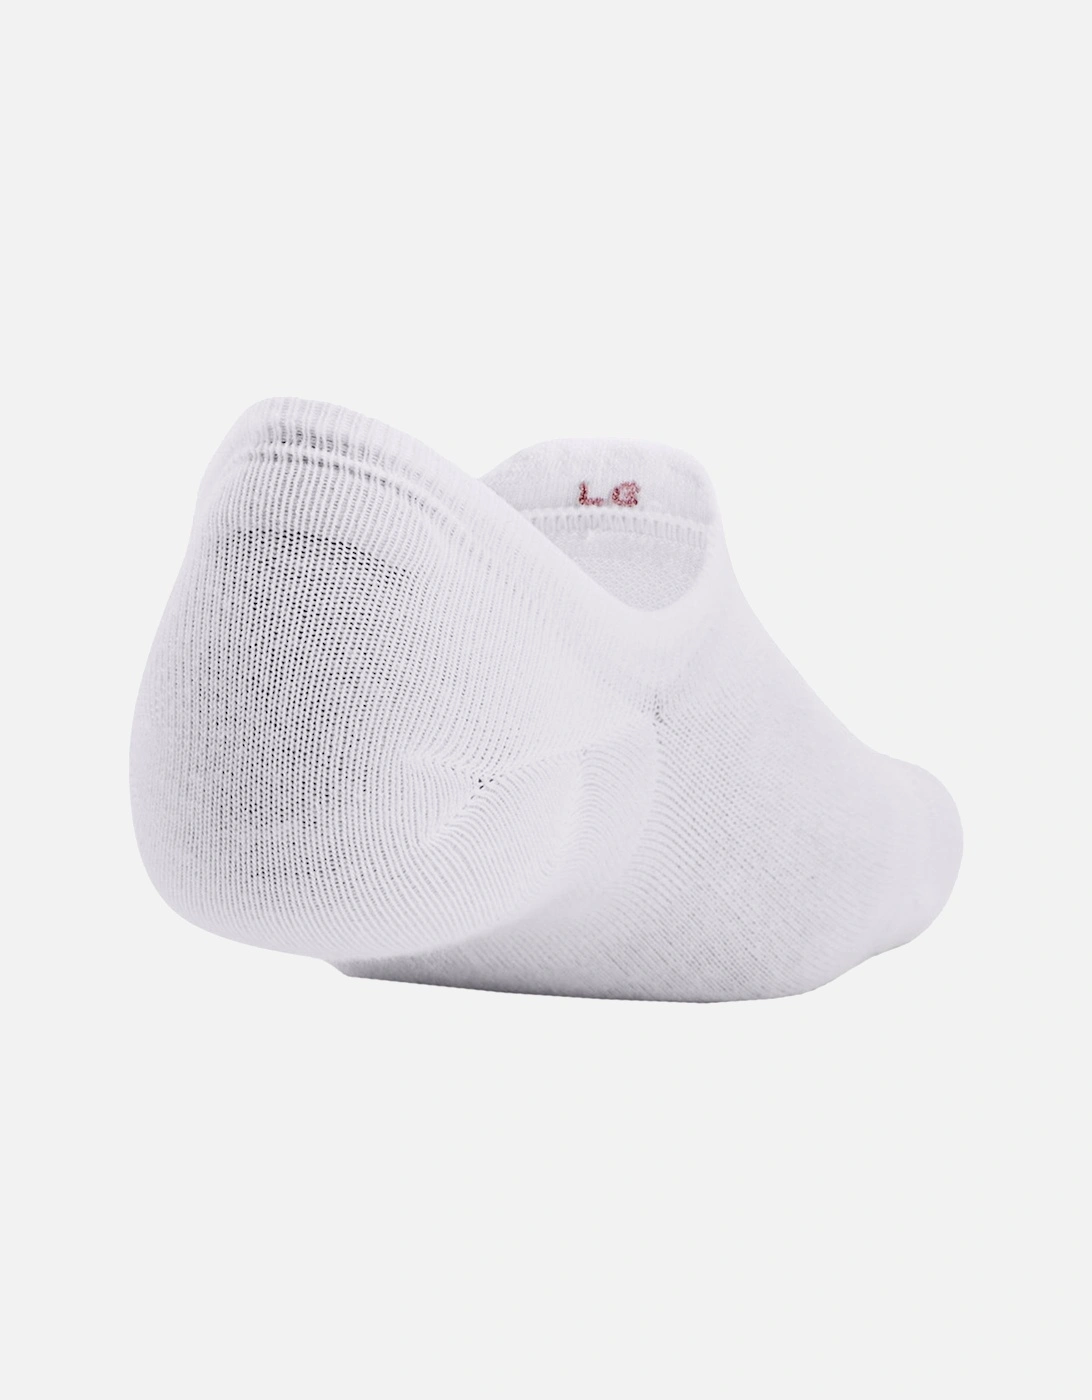 Womens Ultra Lo Socks 3 Pack (White)